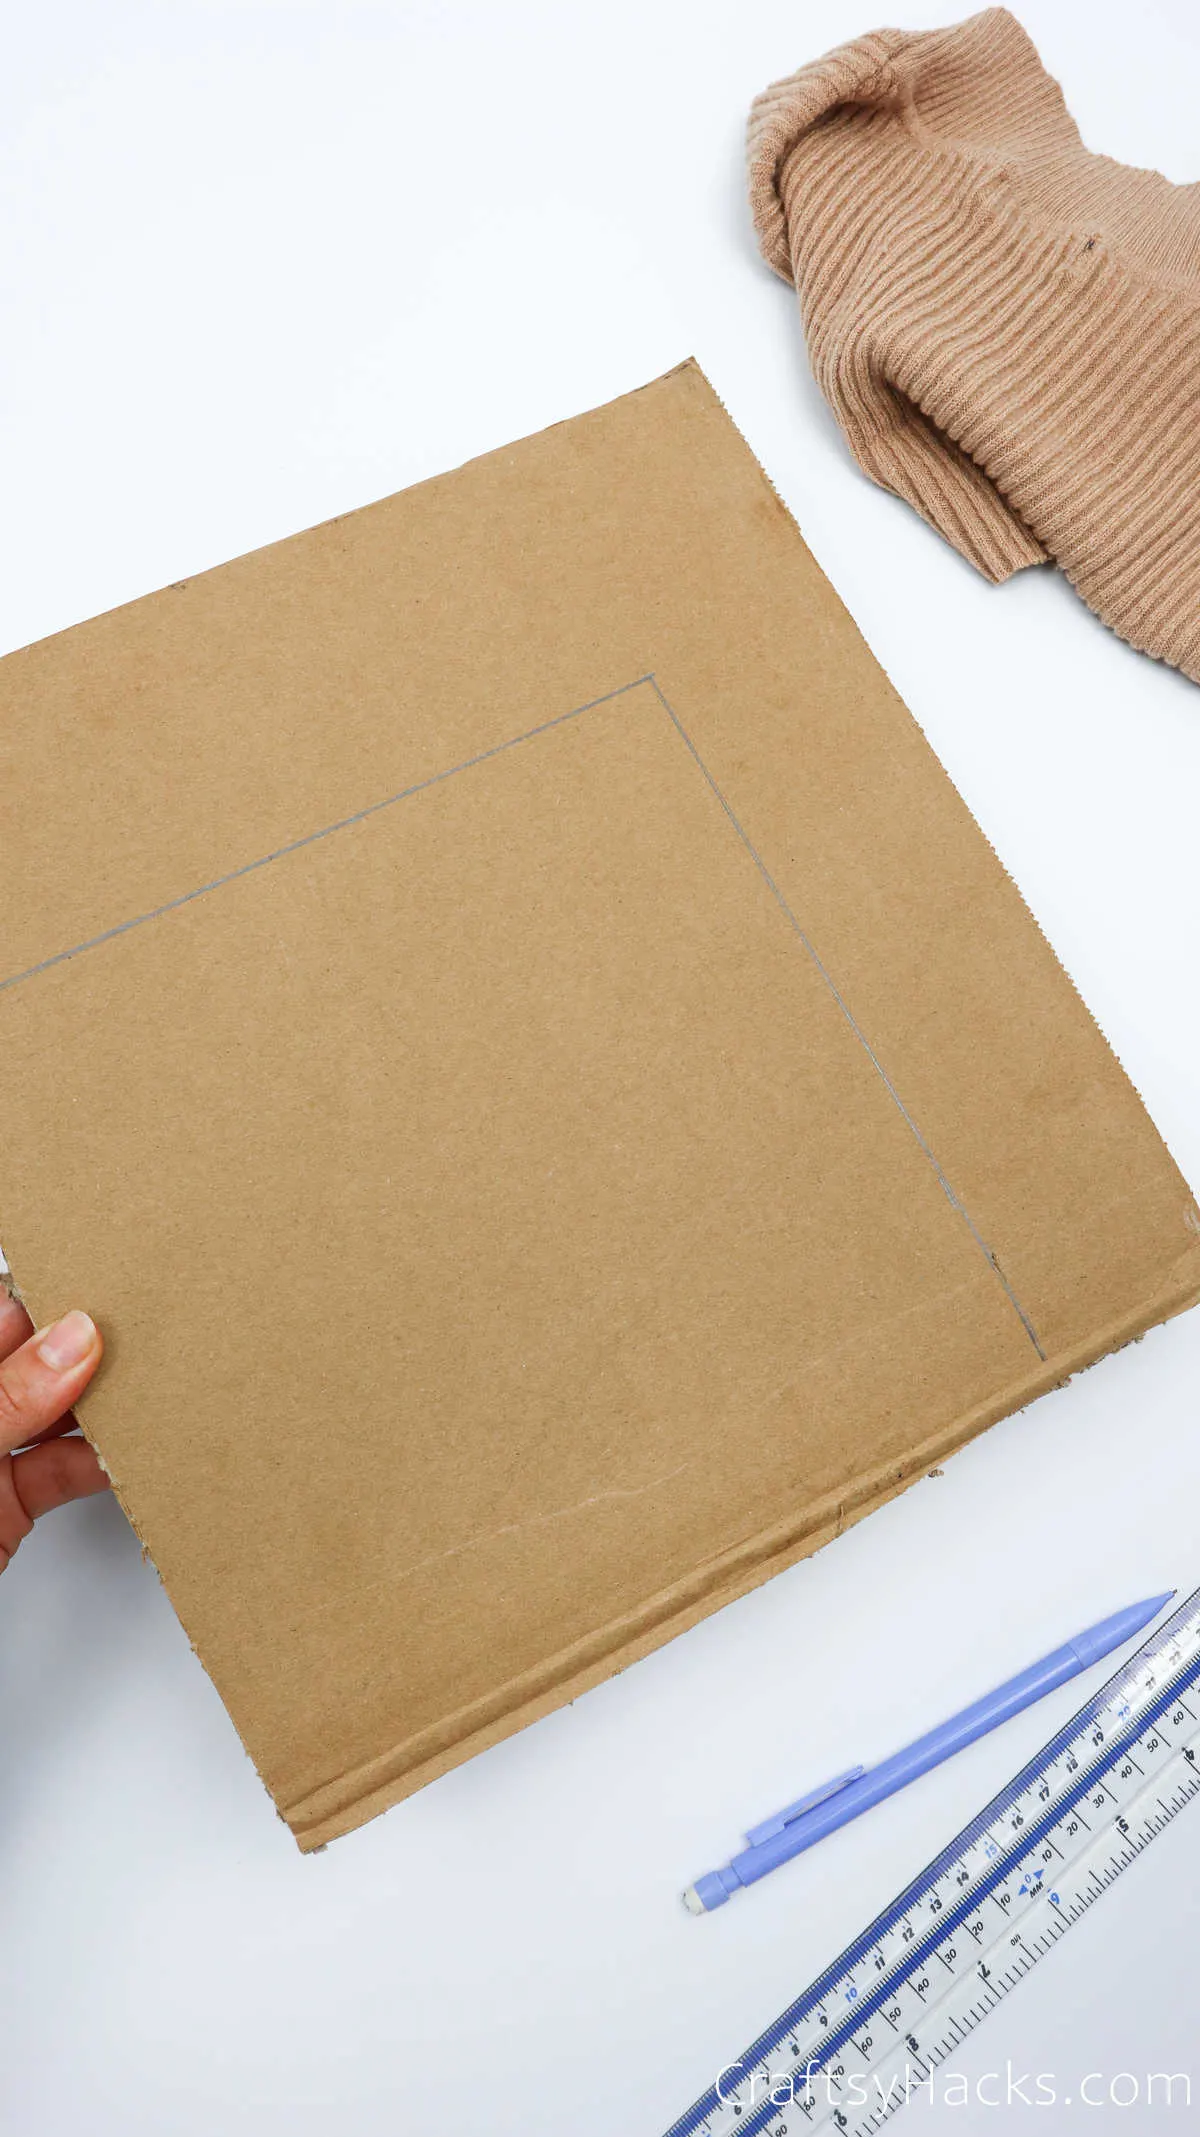 tracing box shape on cardboard